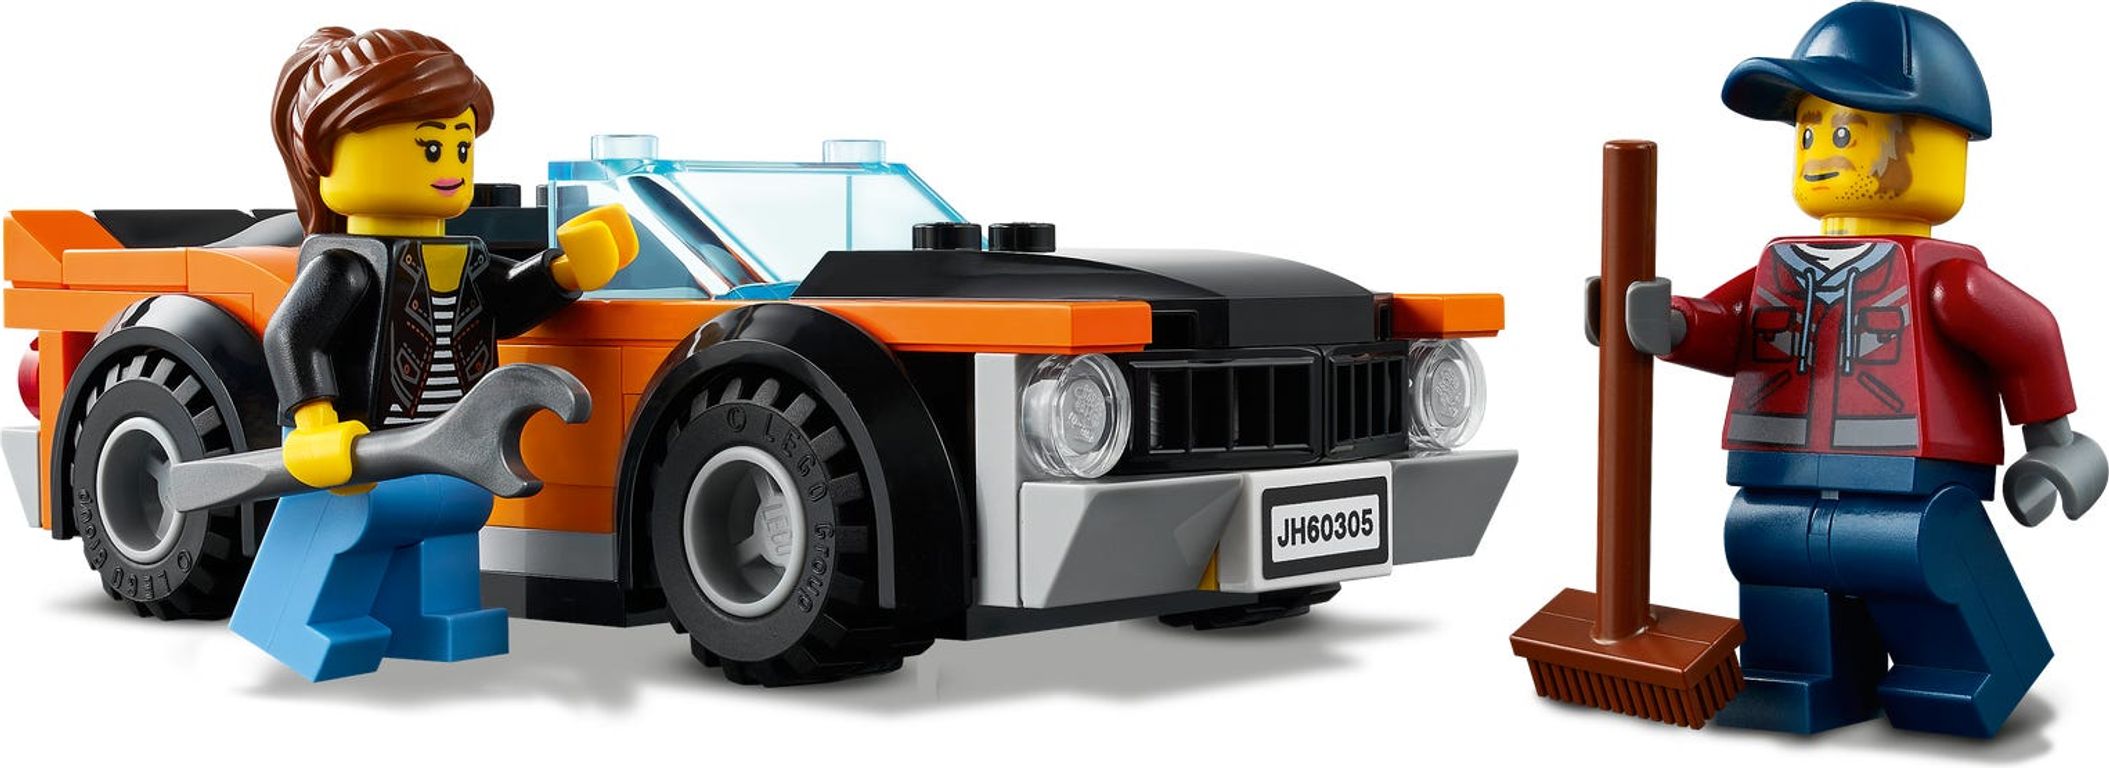 LEGO® City Car Transporter minifigures